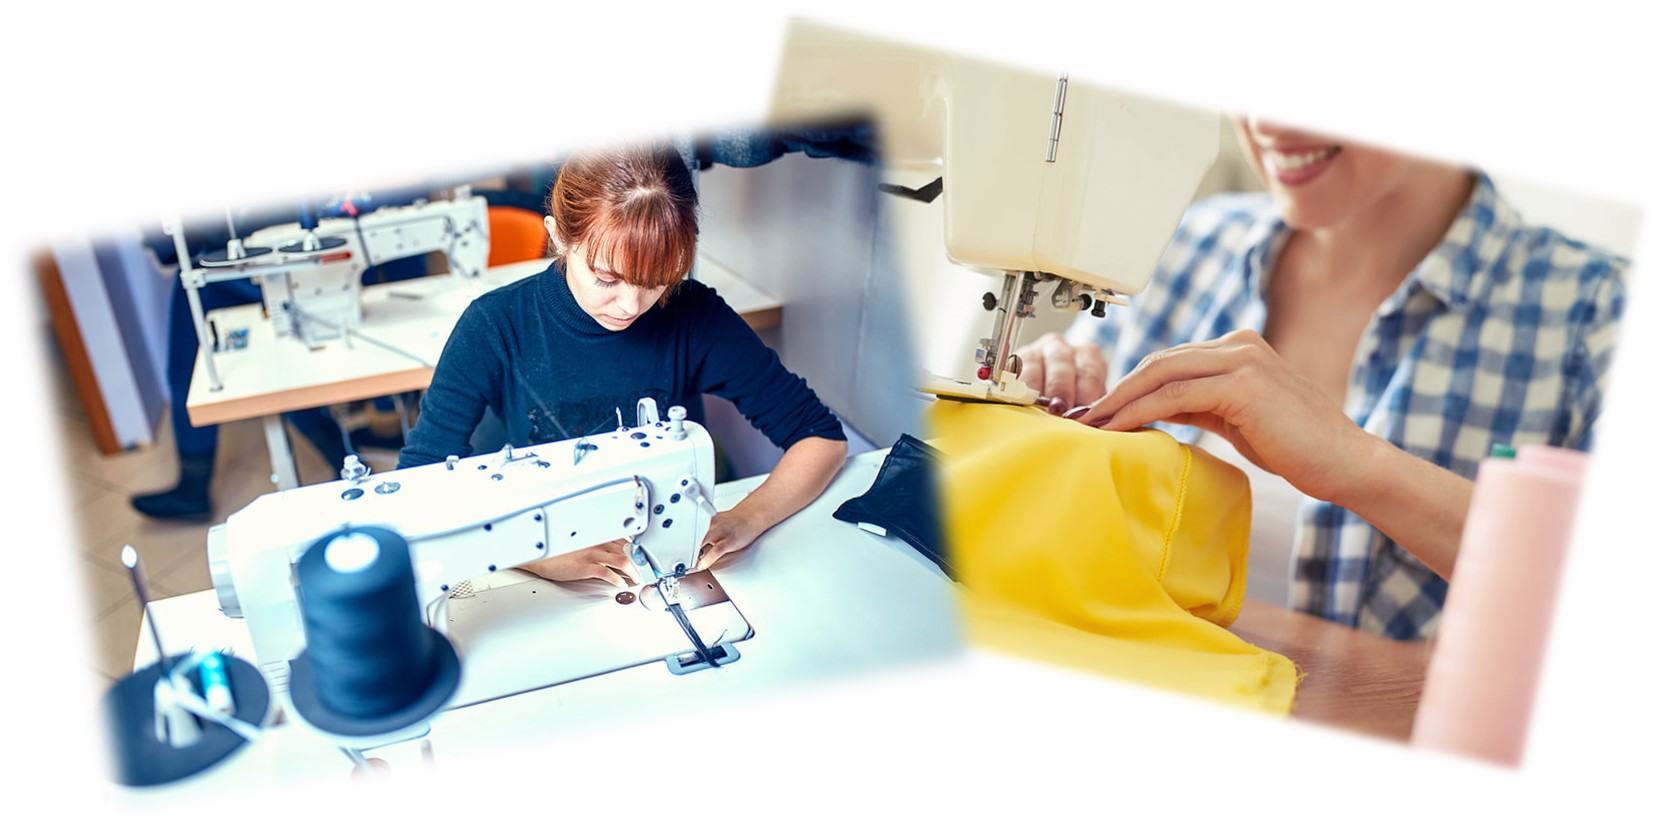 residential vs industrial sewing machines